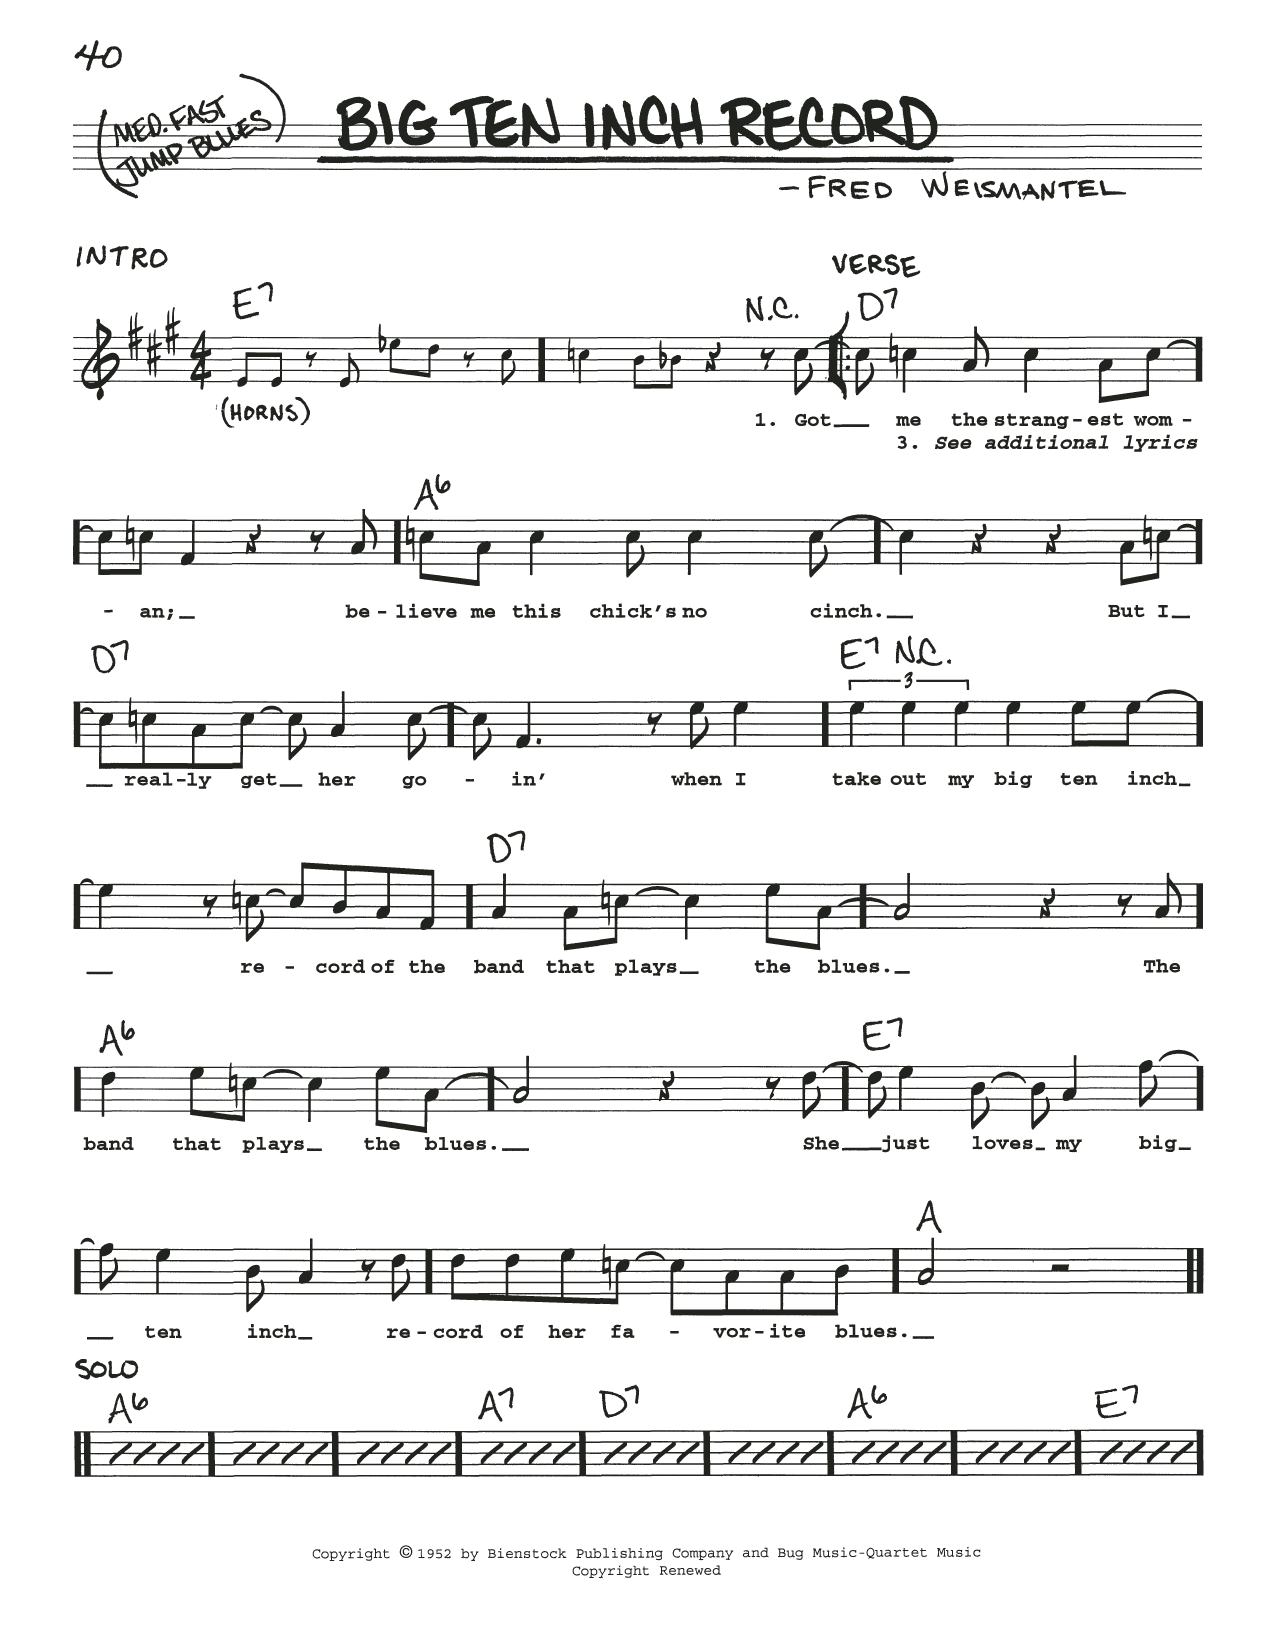 Bull Moose Jackson Big Ten Inch Record Sheet Music Notes & Chords for Real Book – Melody, Lyrics & Chords - Download or Print PDF